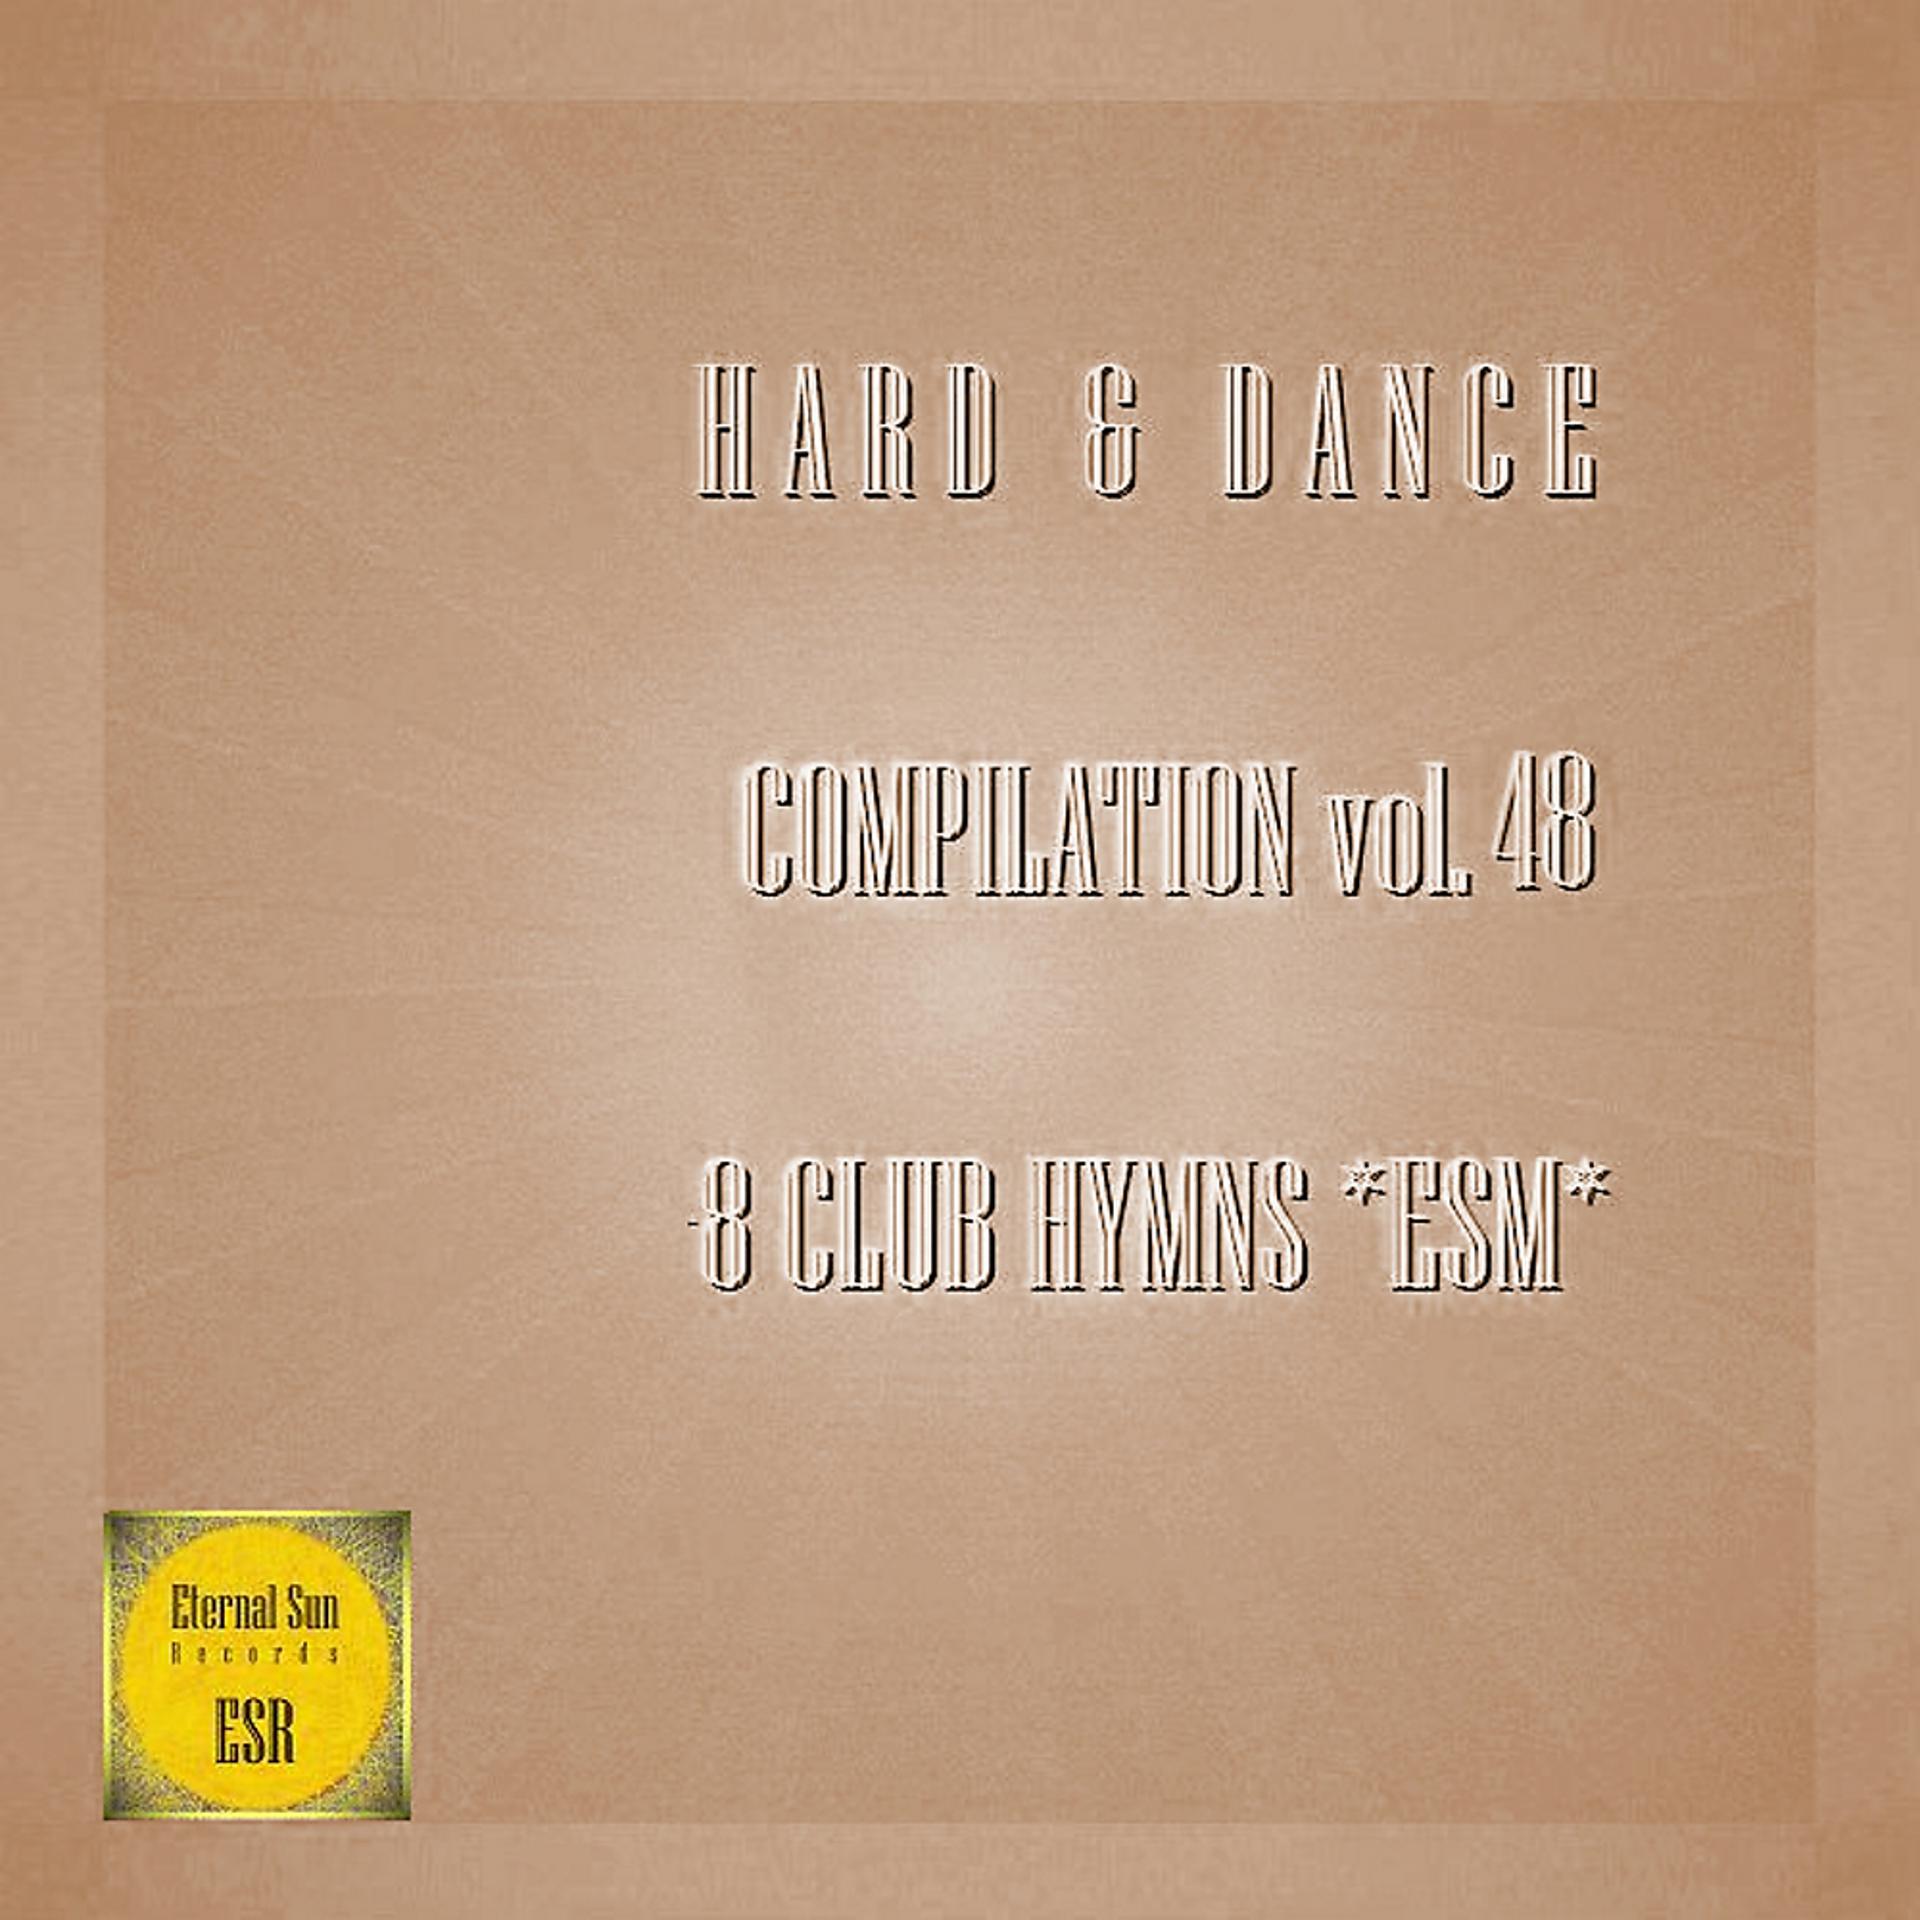 Постер альбома Hard & Dance Compilation vol. 48 - 8 Club Hymns ESM